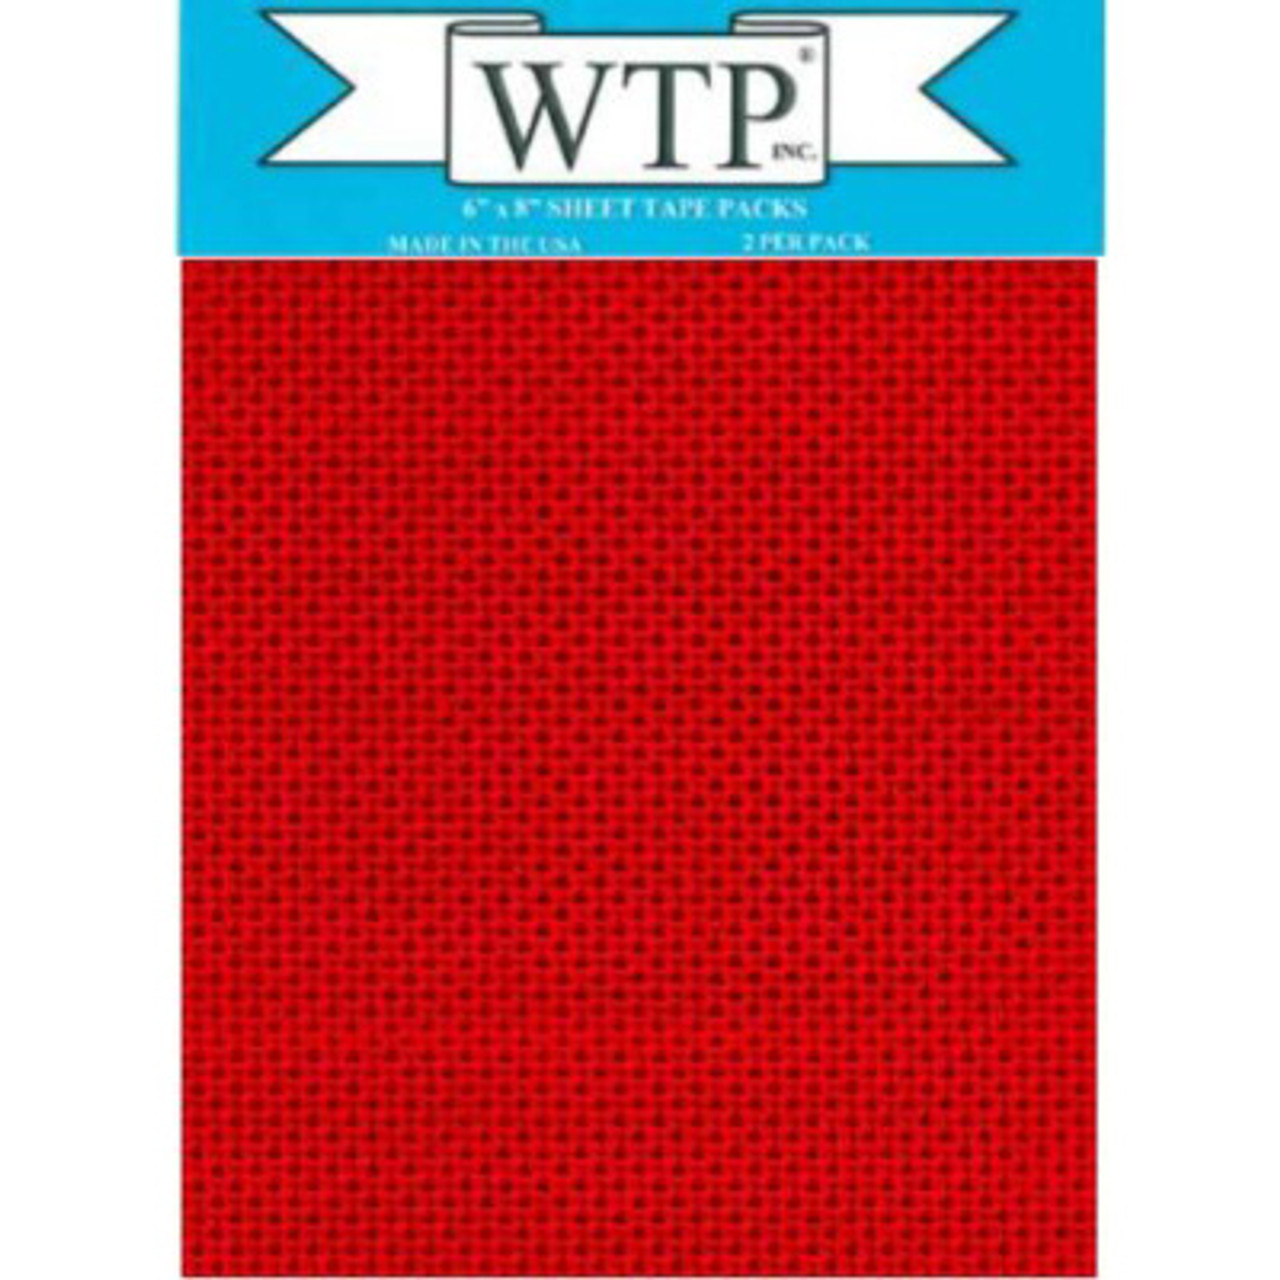 WTP 6"x8" Decorator Tape (2 Sheets Per Pack)